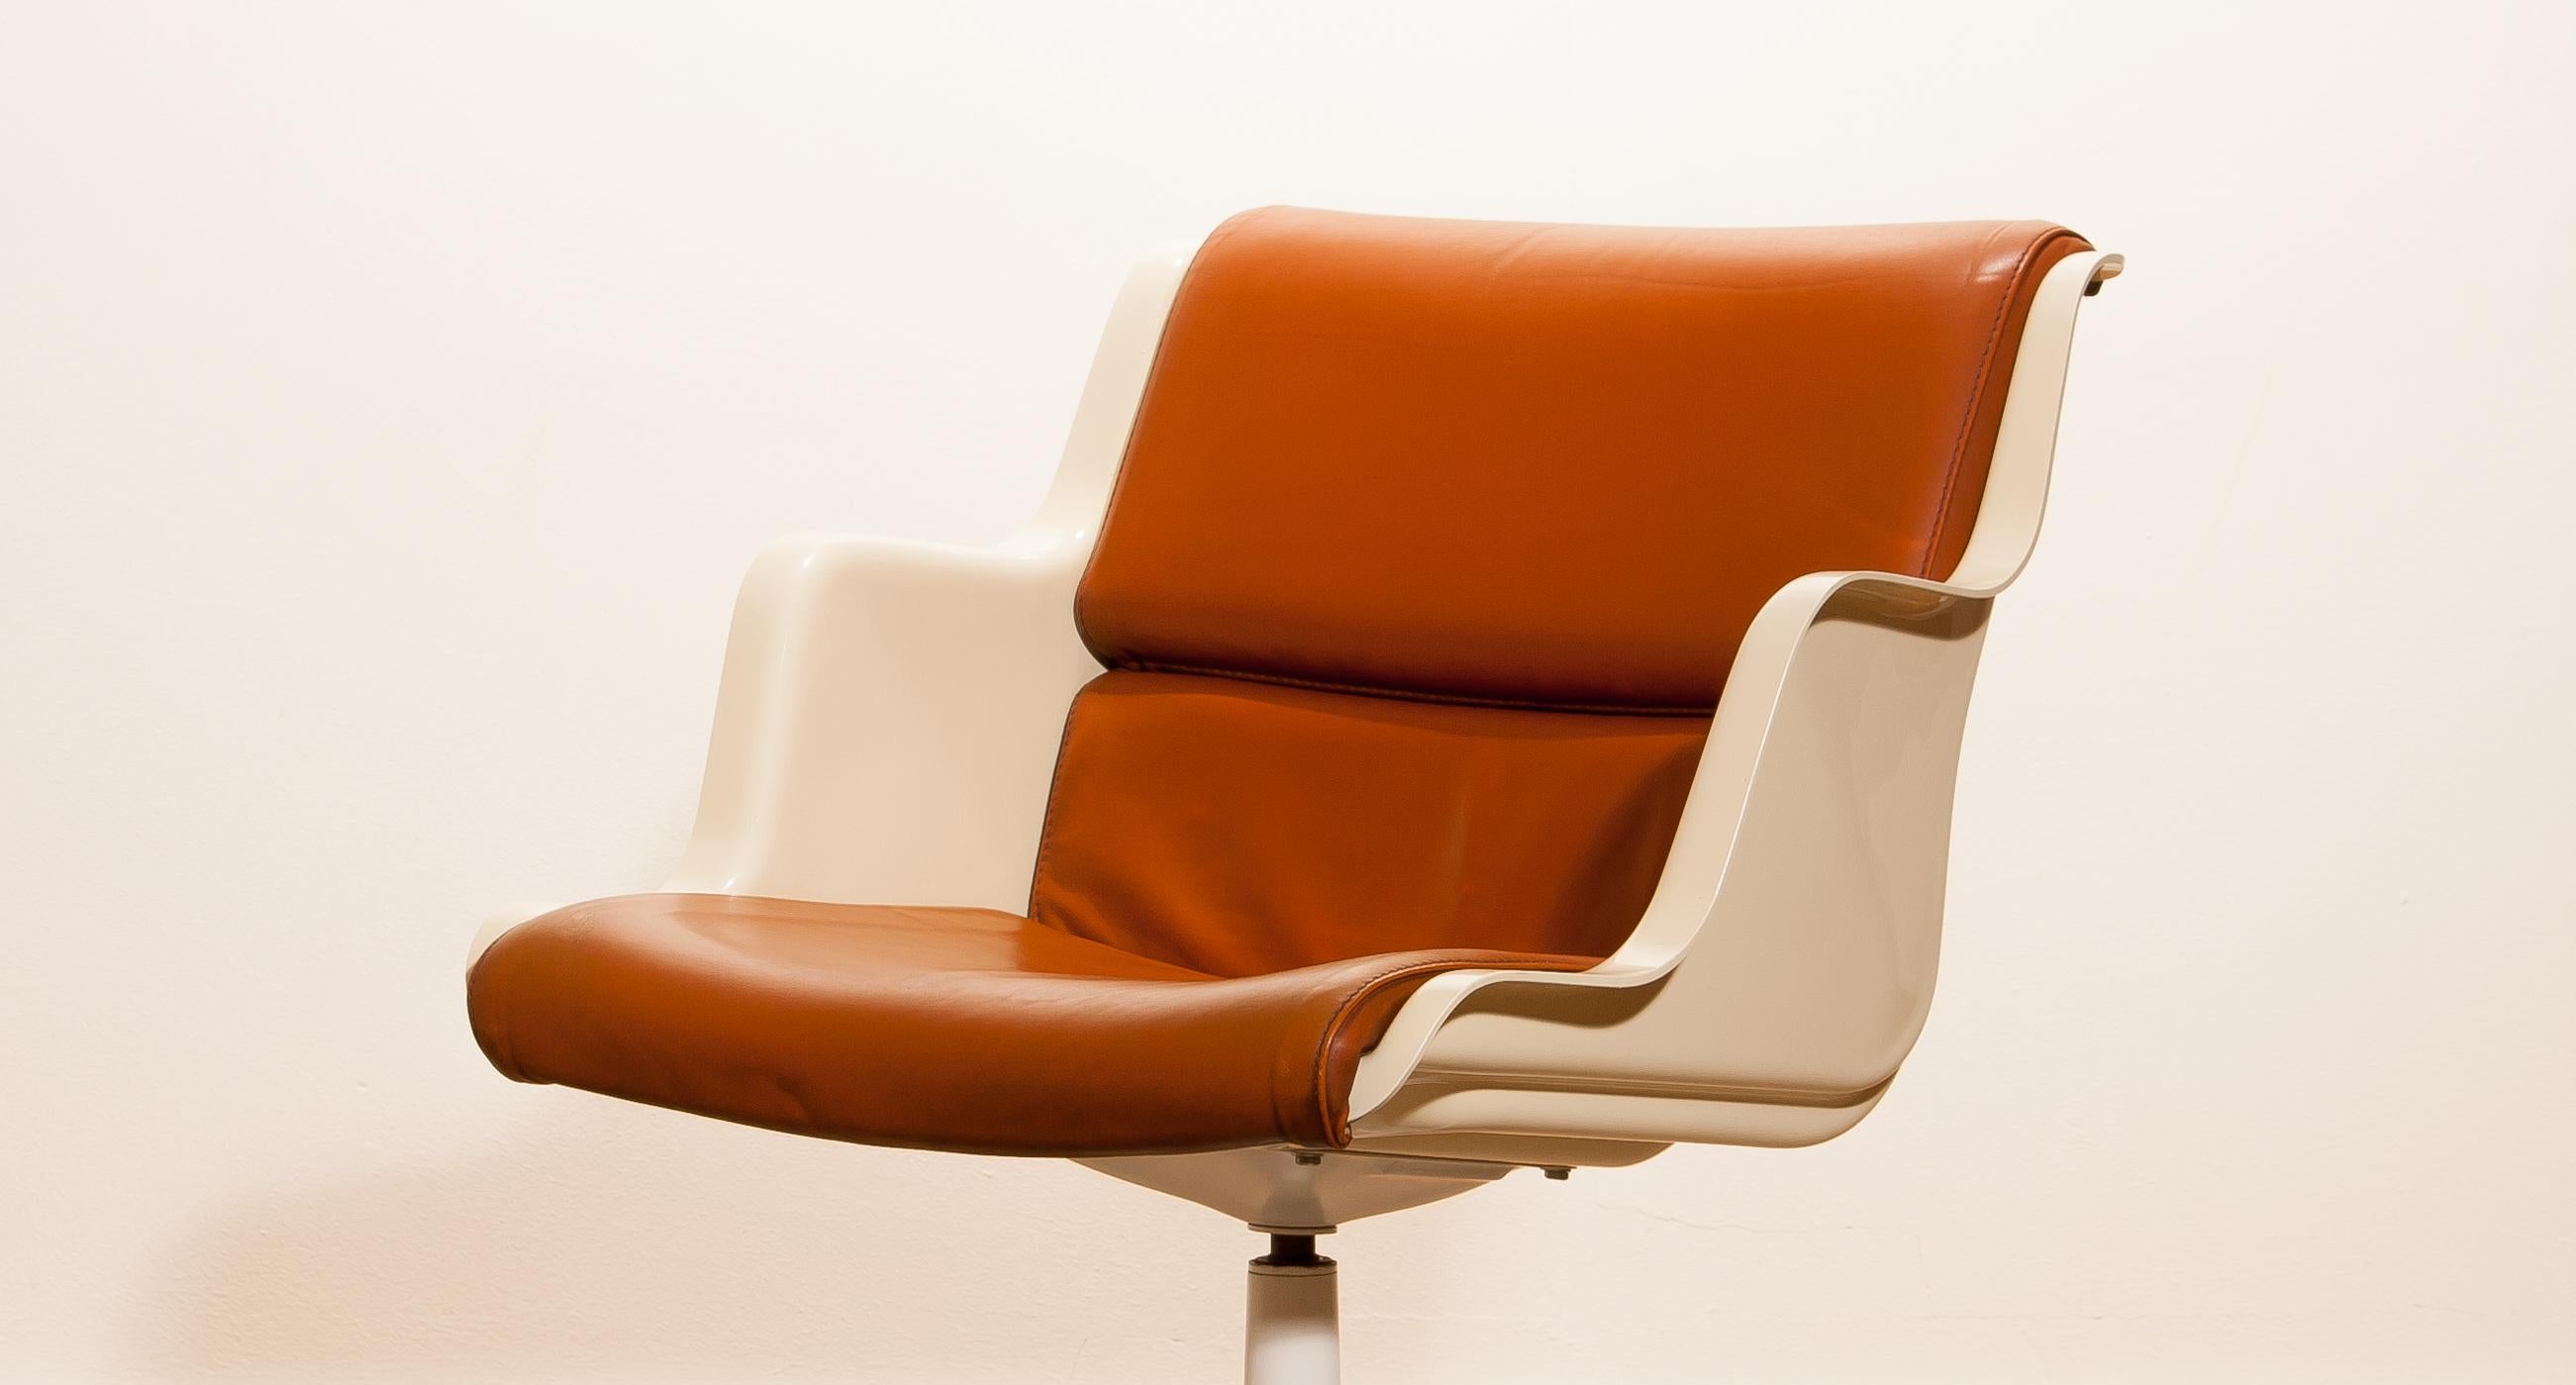 Late 20th Century 1970s, Leather, Fiberglass and Metal Desk Chair by Yrjö Kukkapuro for Haimi